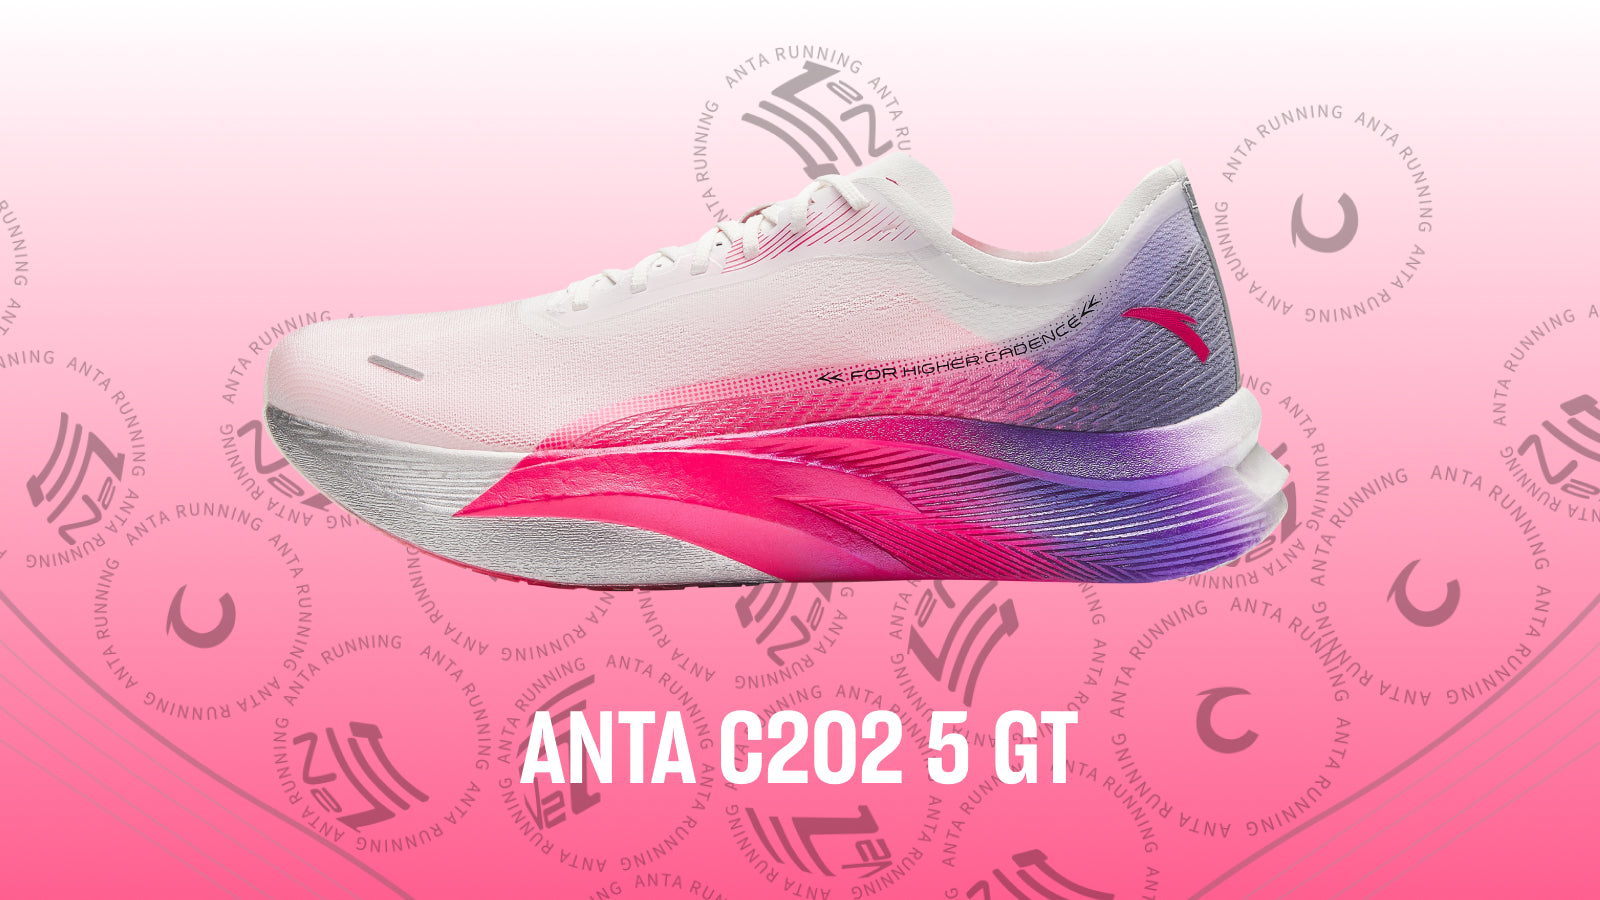 ANTA C202 5 GT Running Shoes